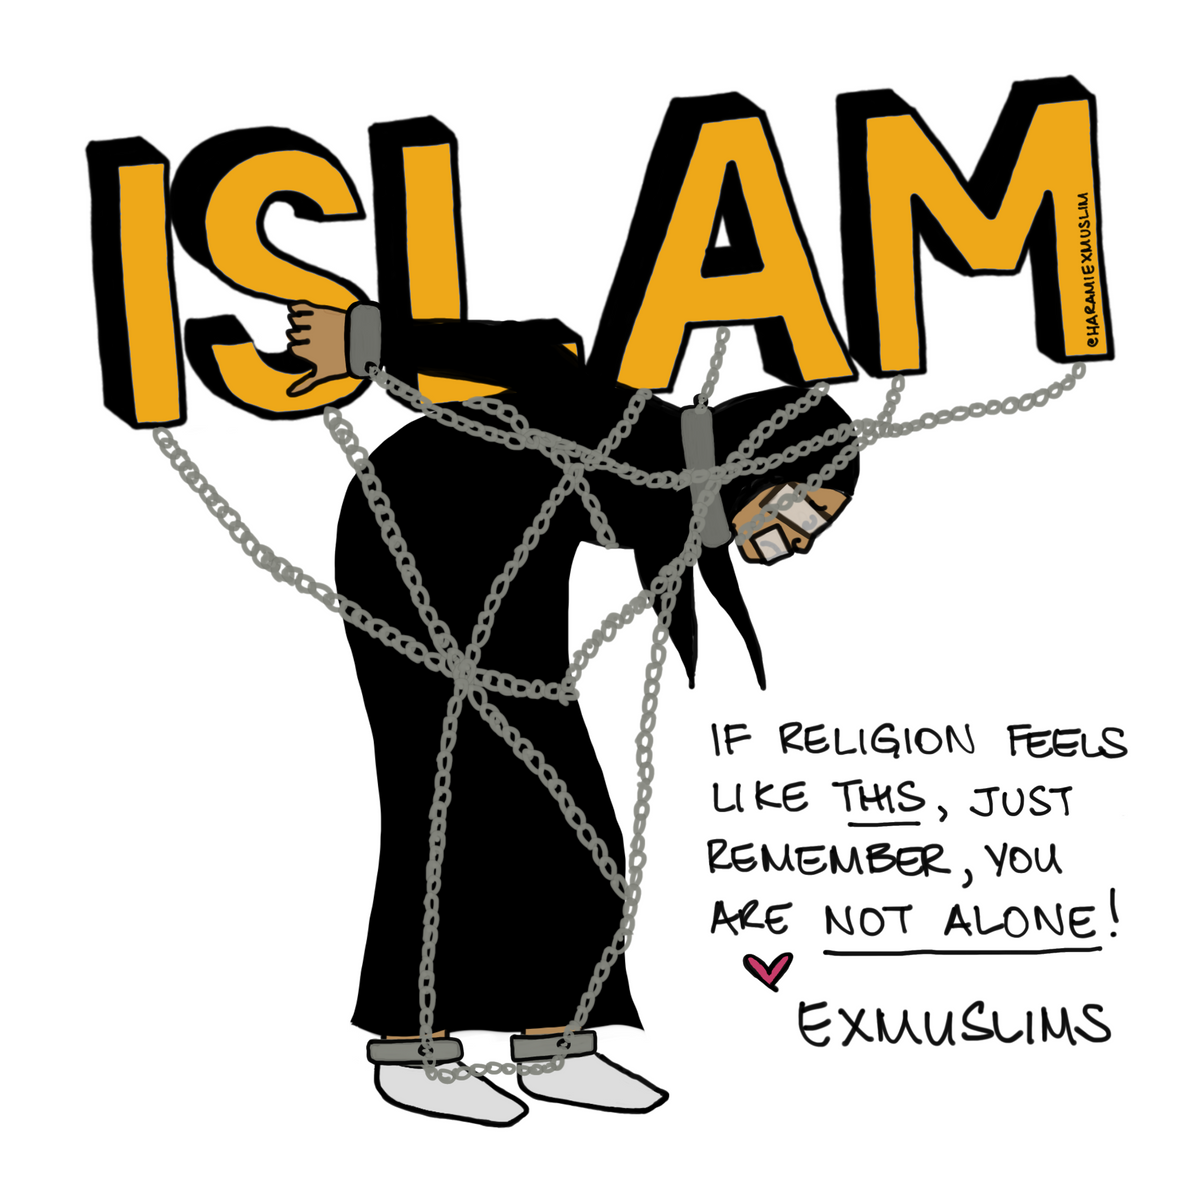 Does Islam feel like this?